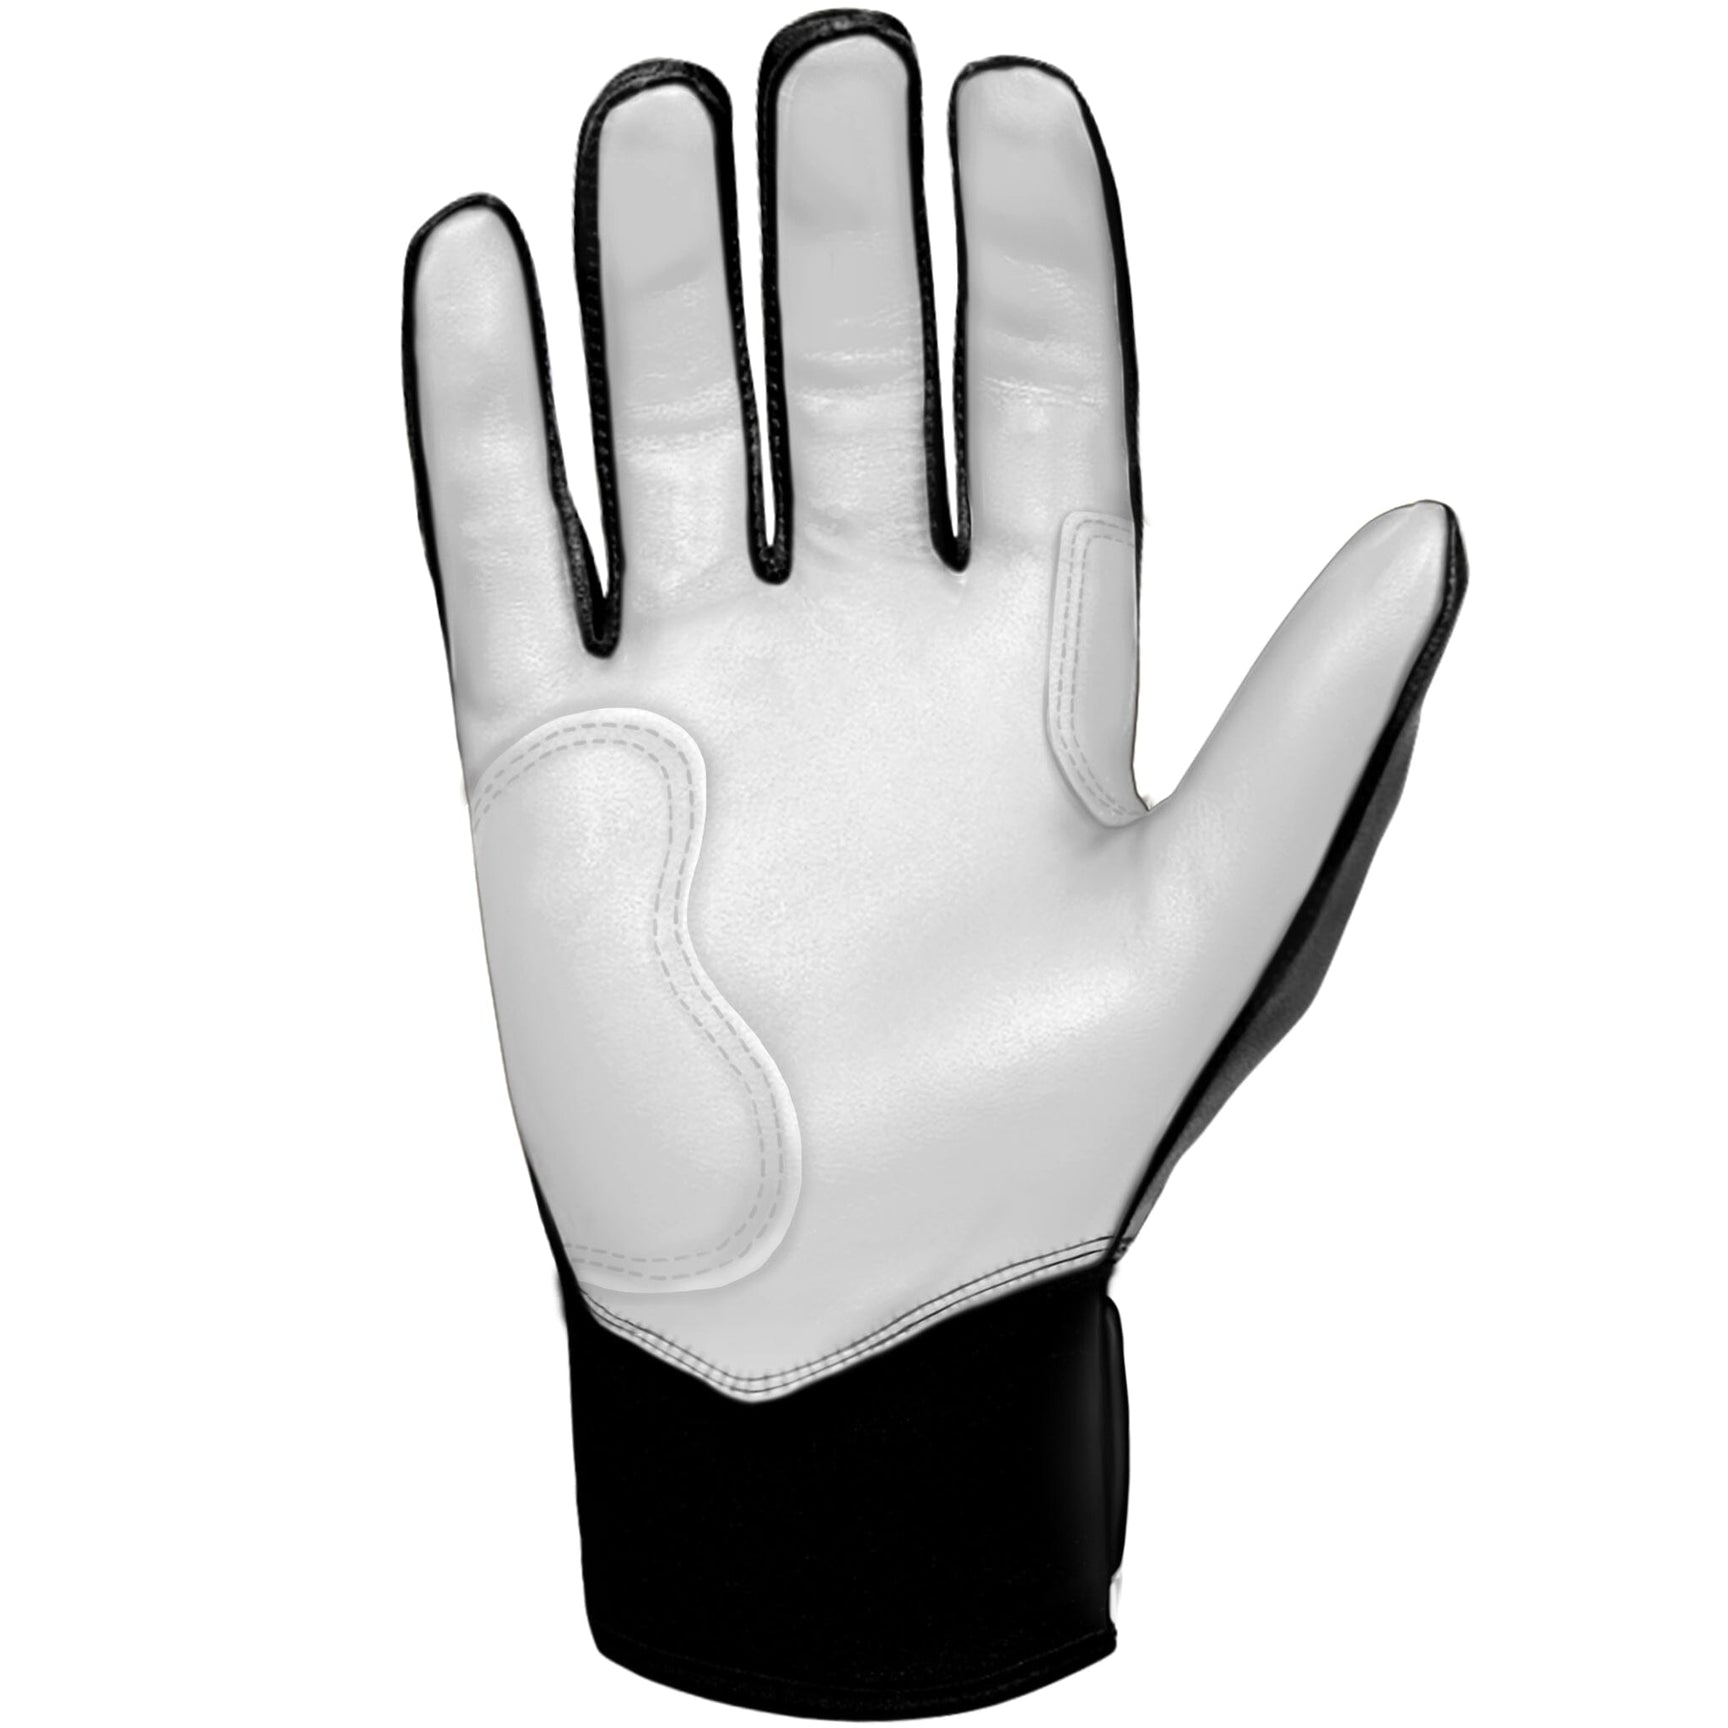 Premium Pro Phillips Series Short Cuff Batting Gloves, Yth Large